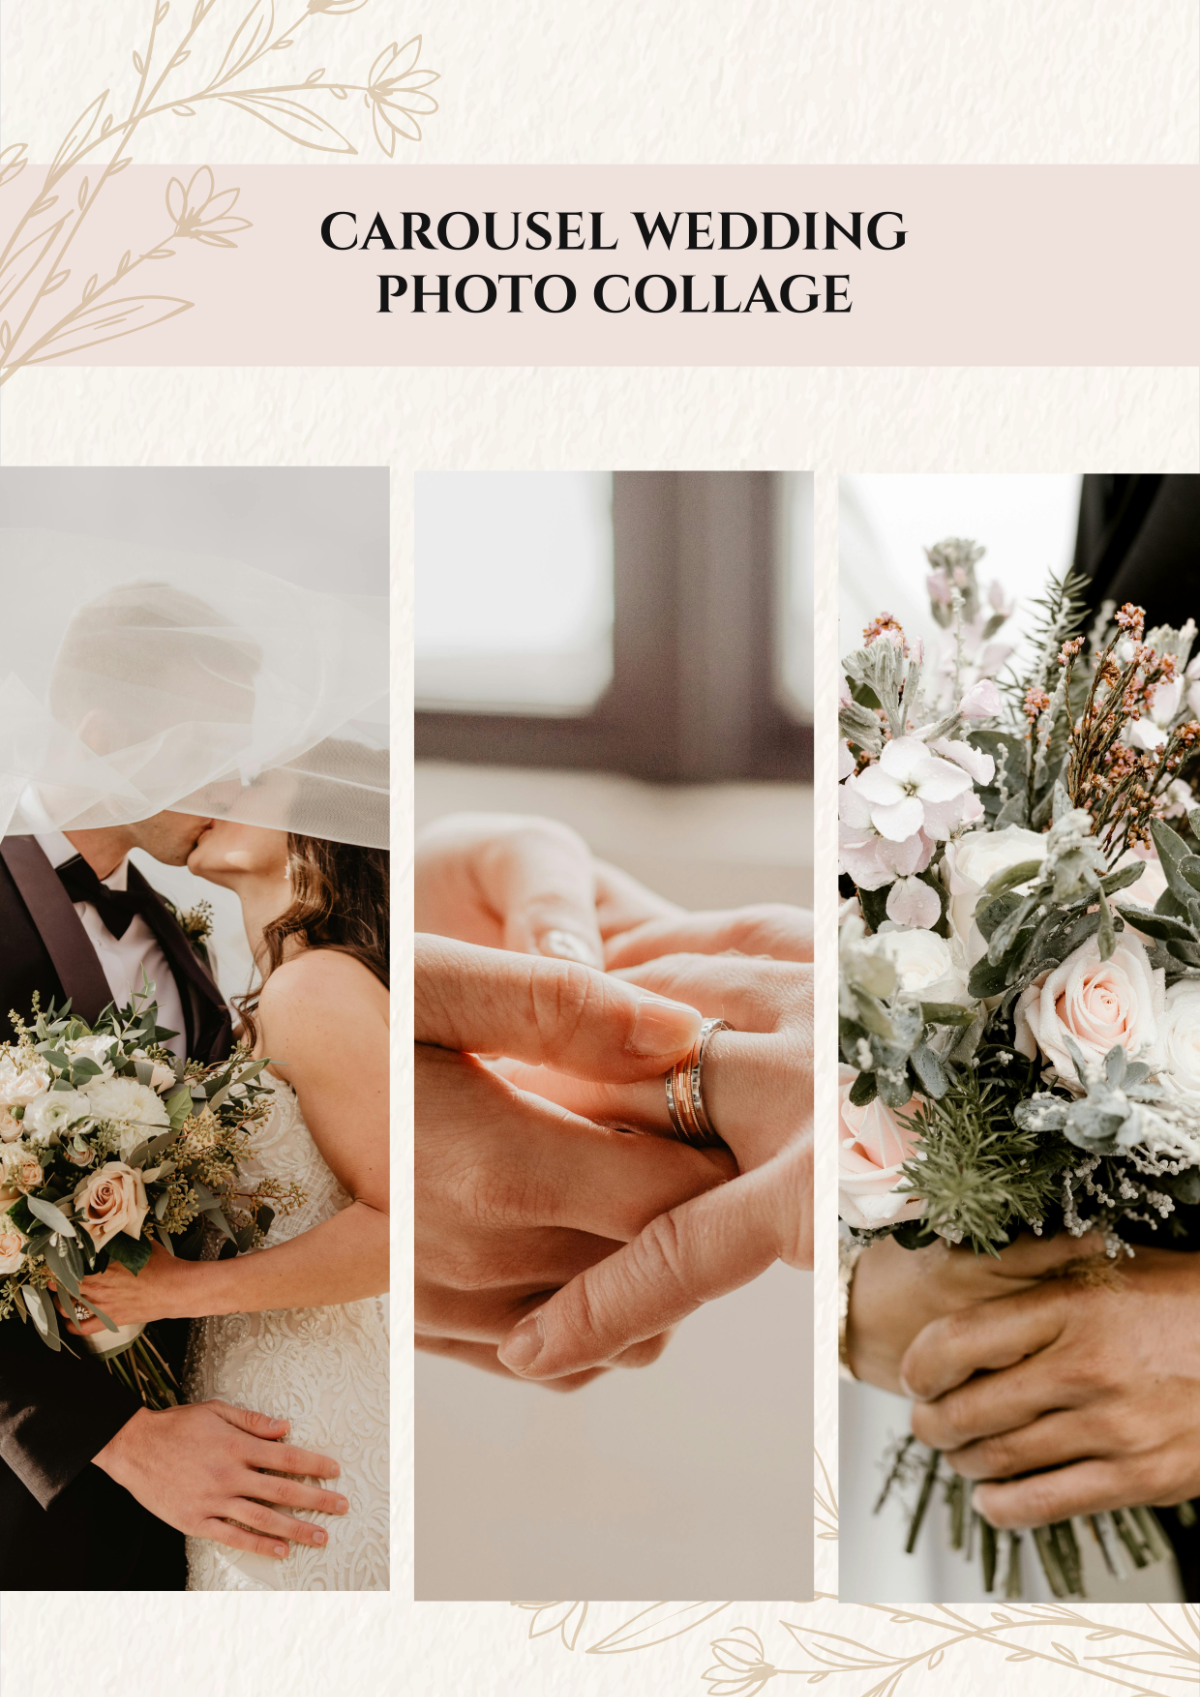 Carousel Wedding Photo Collage